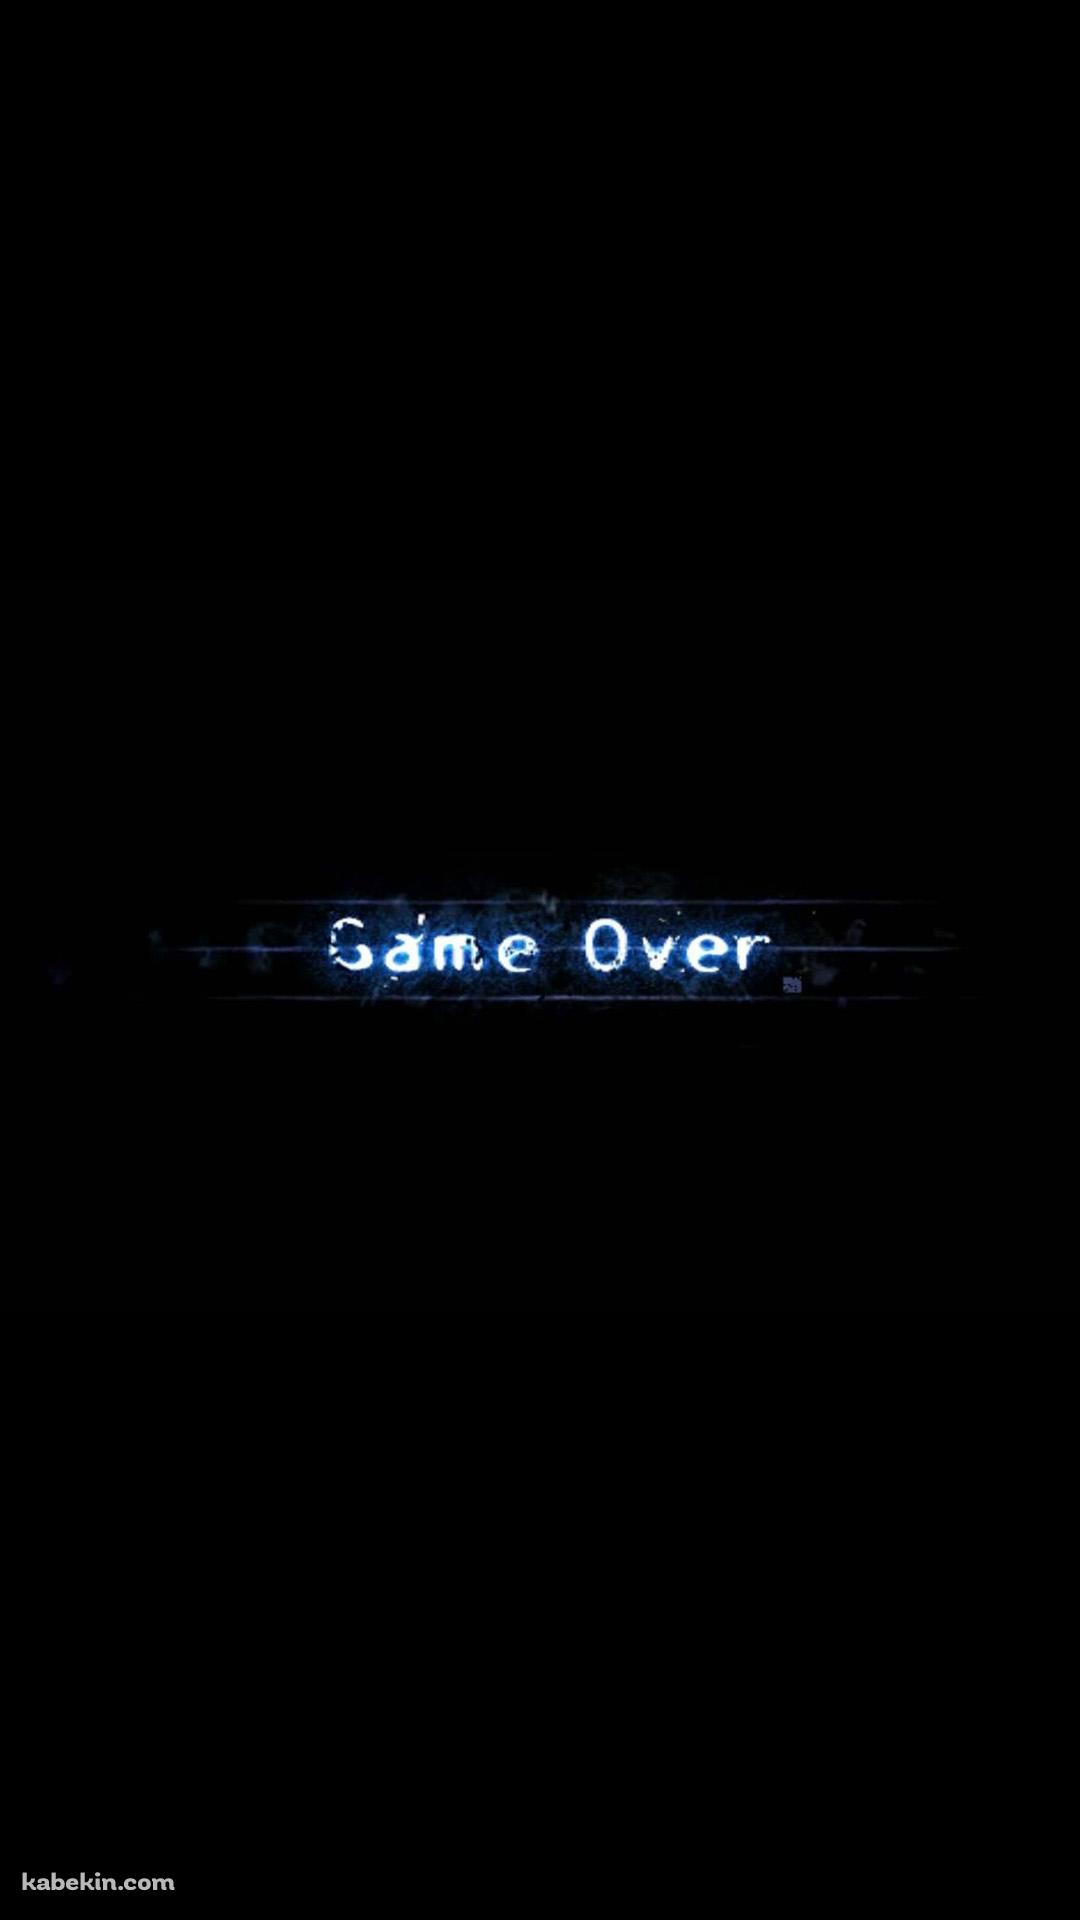 Game Over ゲームオーバーのandroid壁紙 1080 X 19 壁紙キングダム スマホ版